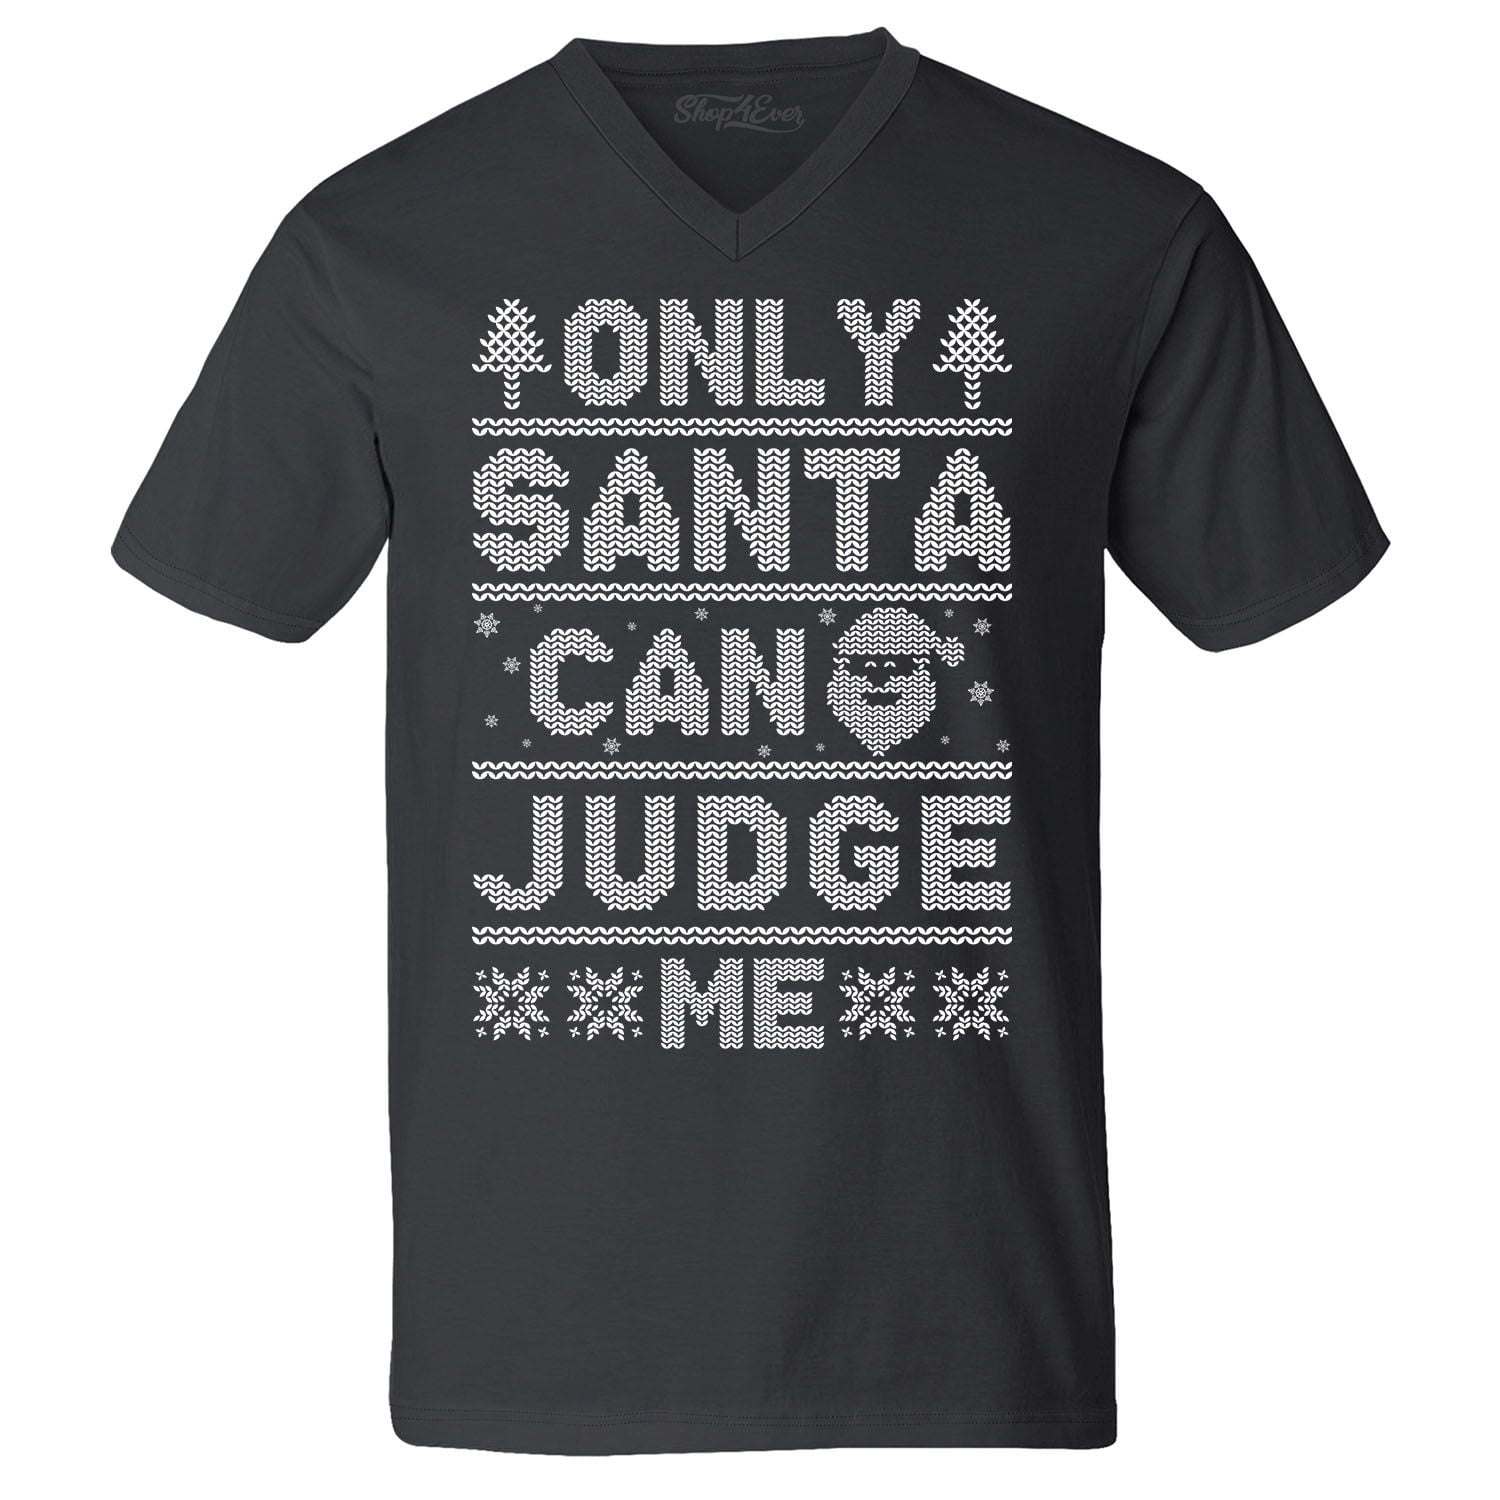 Only Santa can Judge Me V-Neck T-Shirt